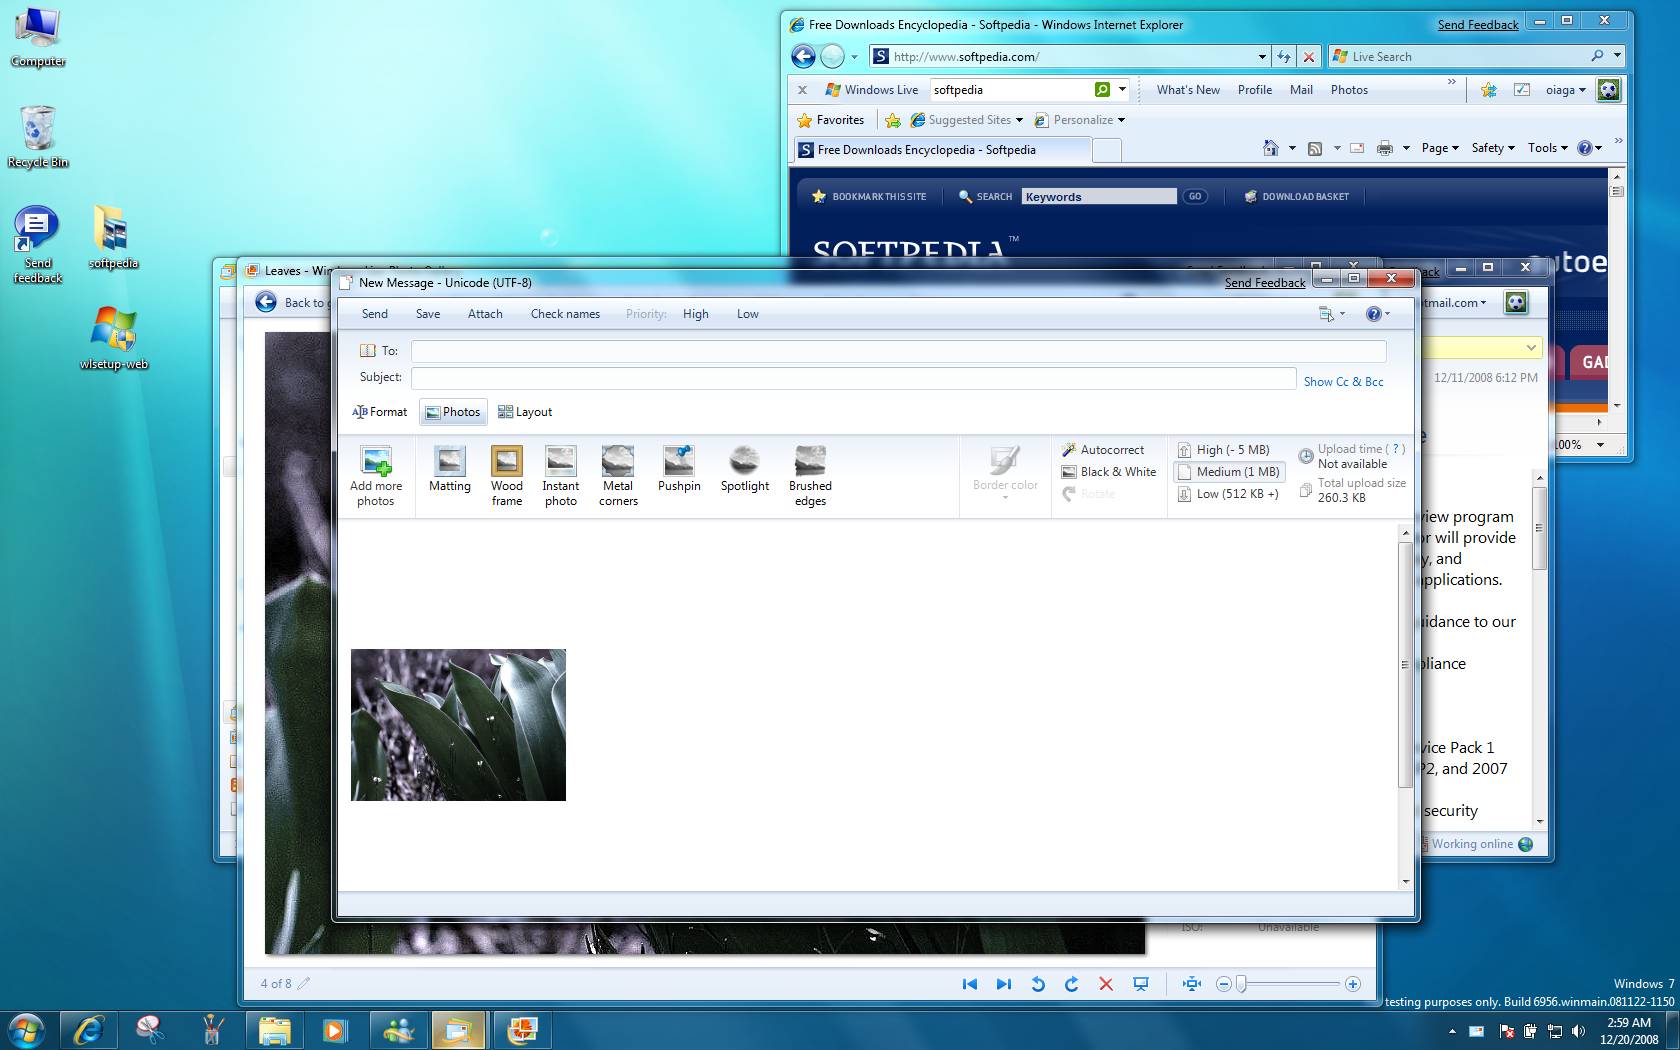 windows live desktop version